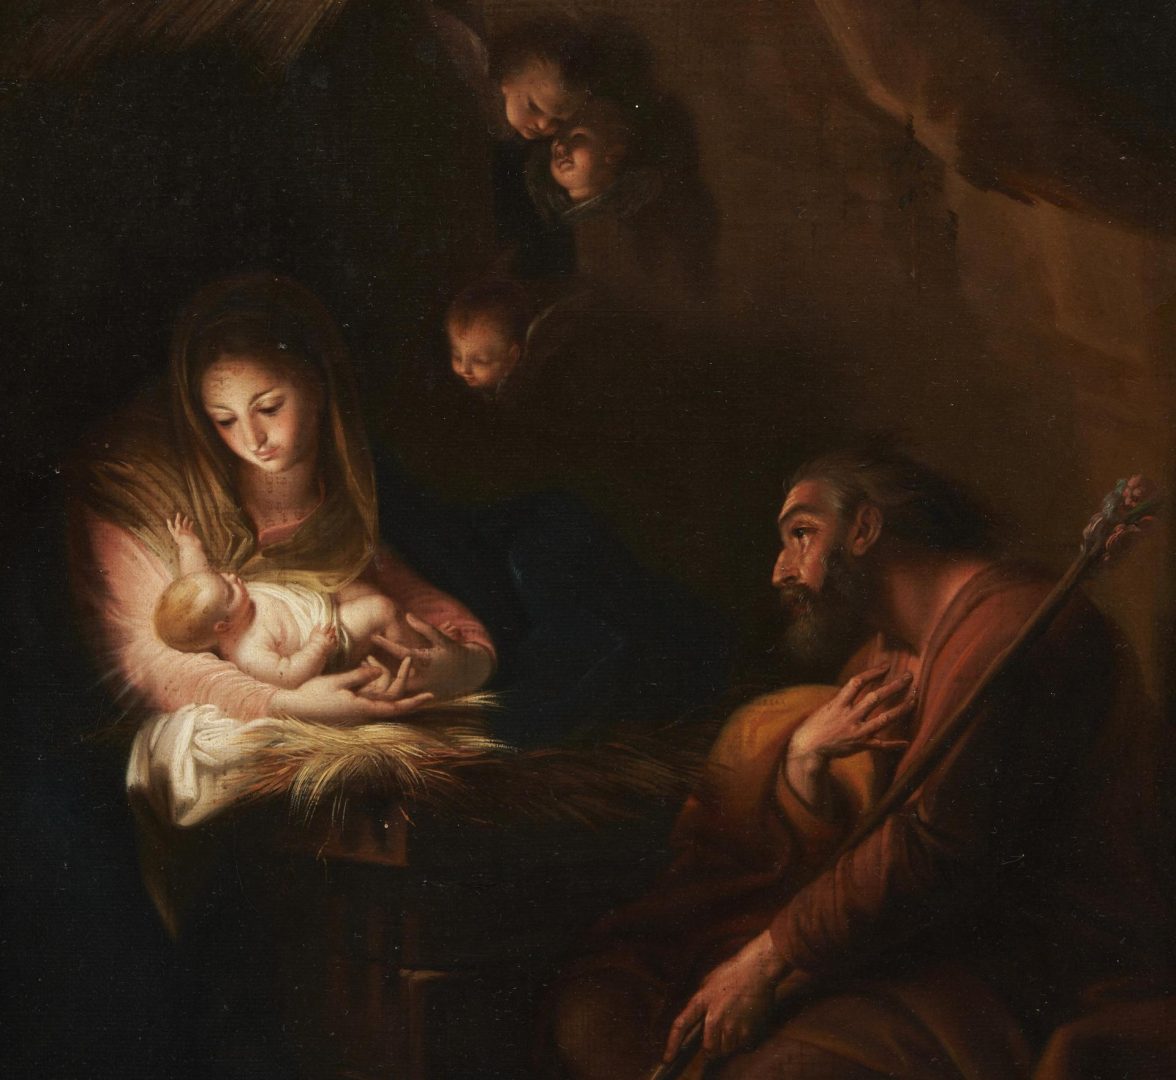 Lot 134: Attr. Giuseppe Mazzolini O/C, "Nativity" After Pompeo Batoni